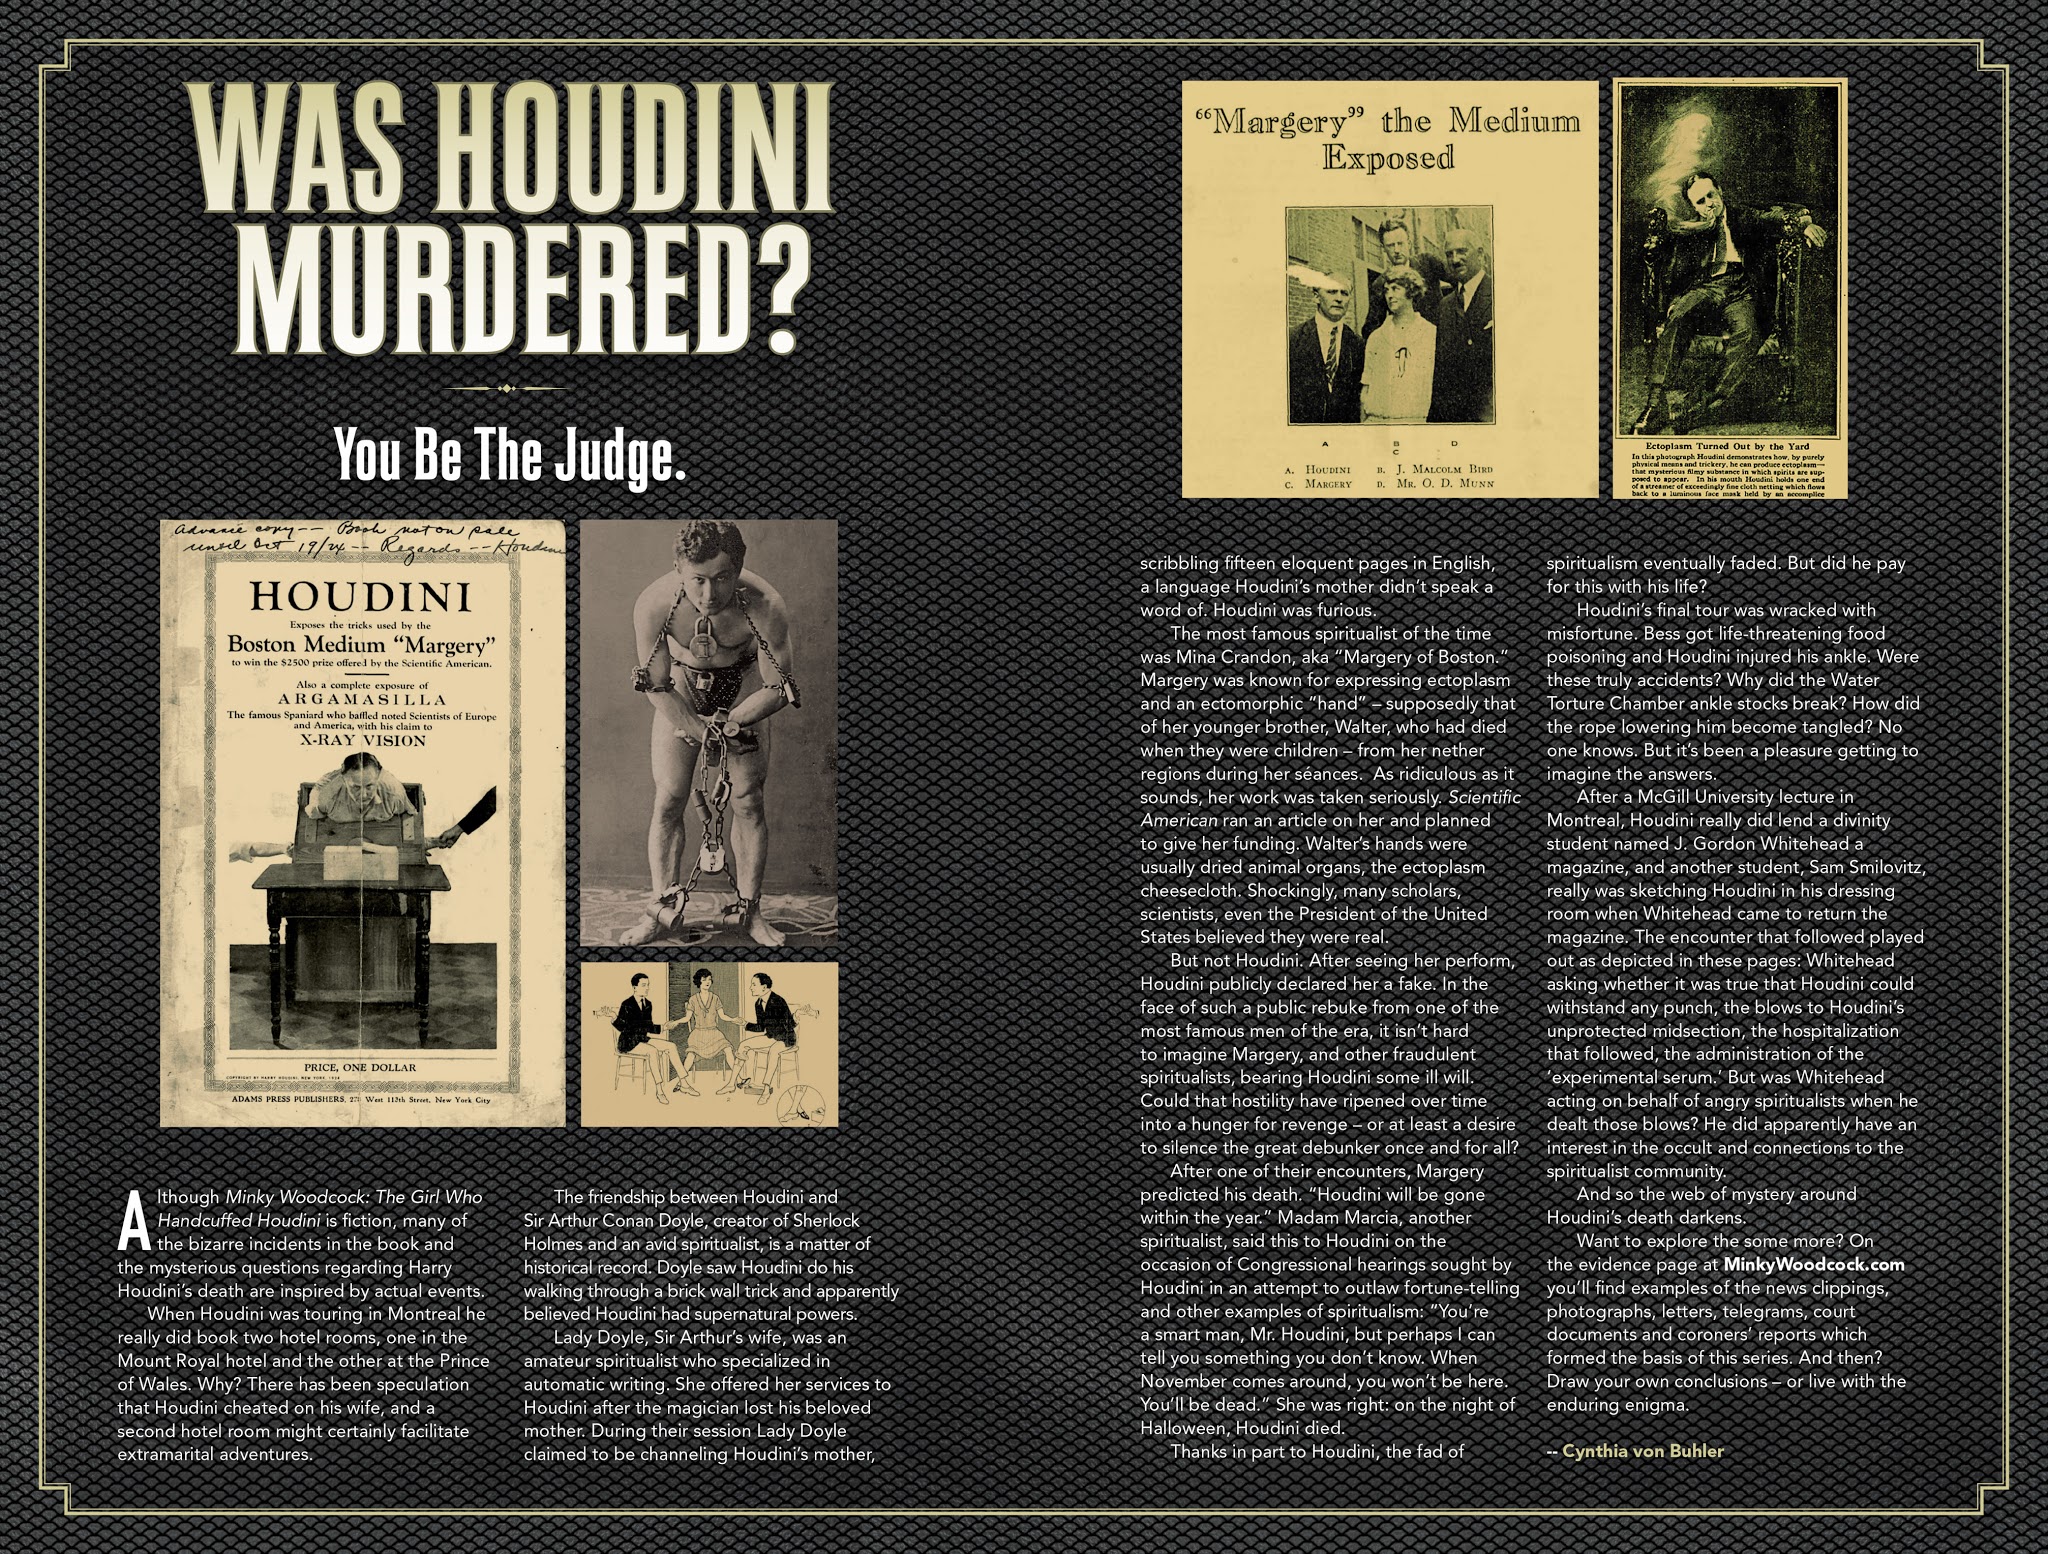 Read online Minky Woodcock: The Girl who Handcuffed Houdini comic -  Issue #3 - 25